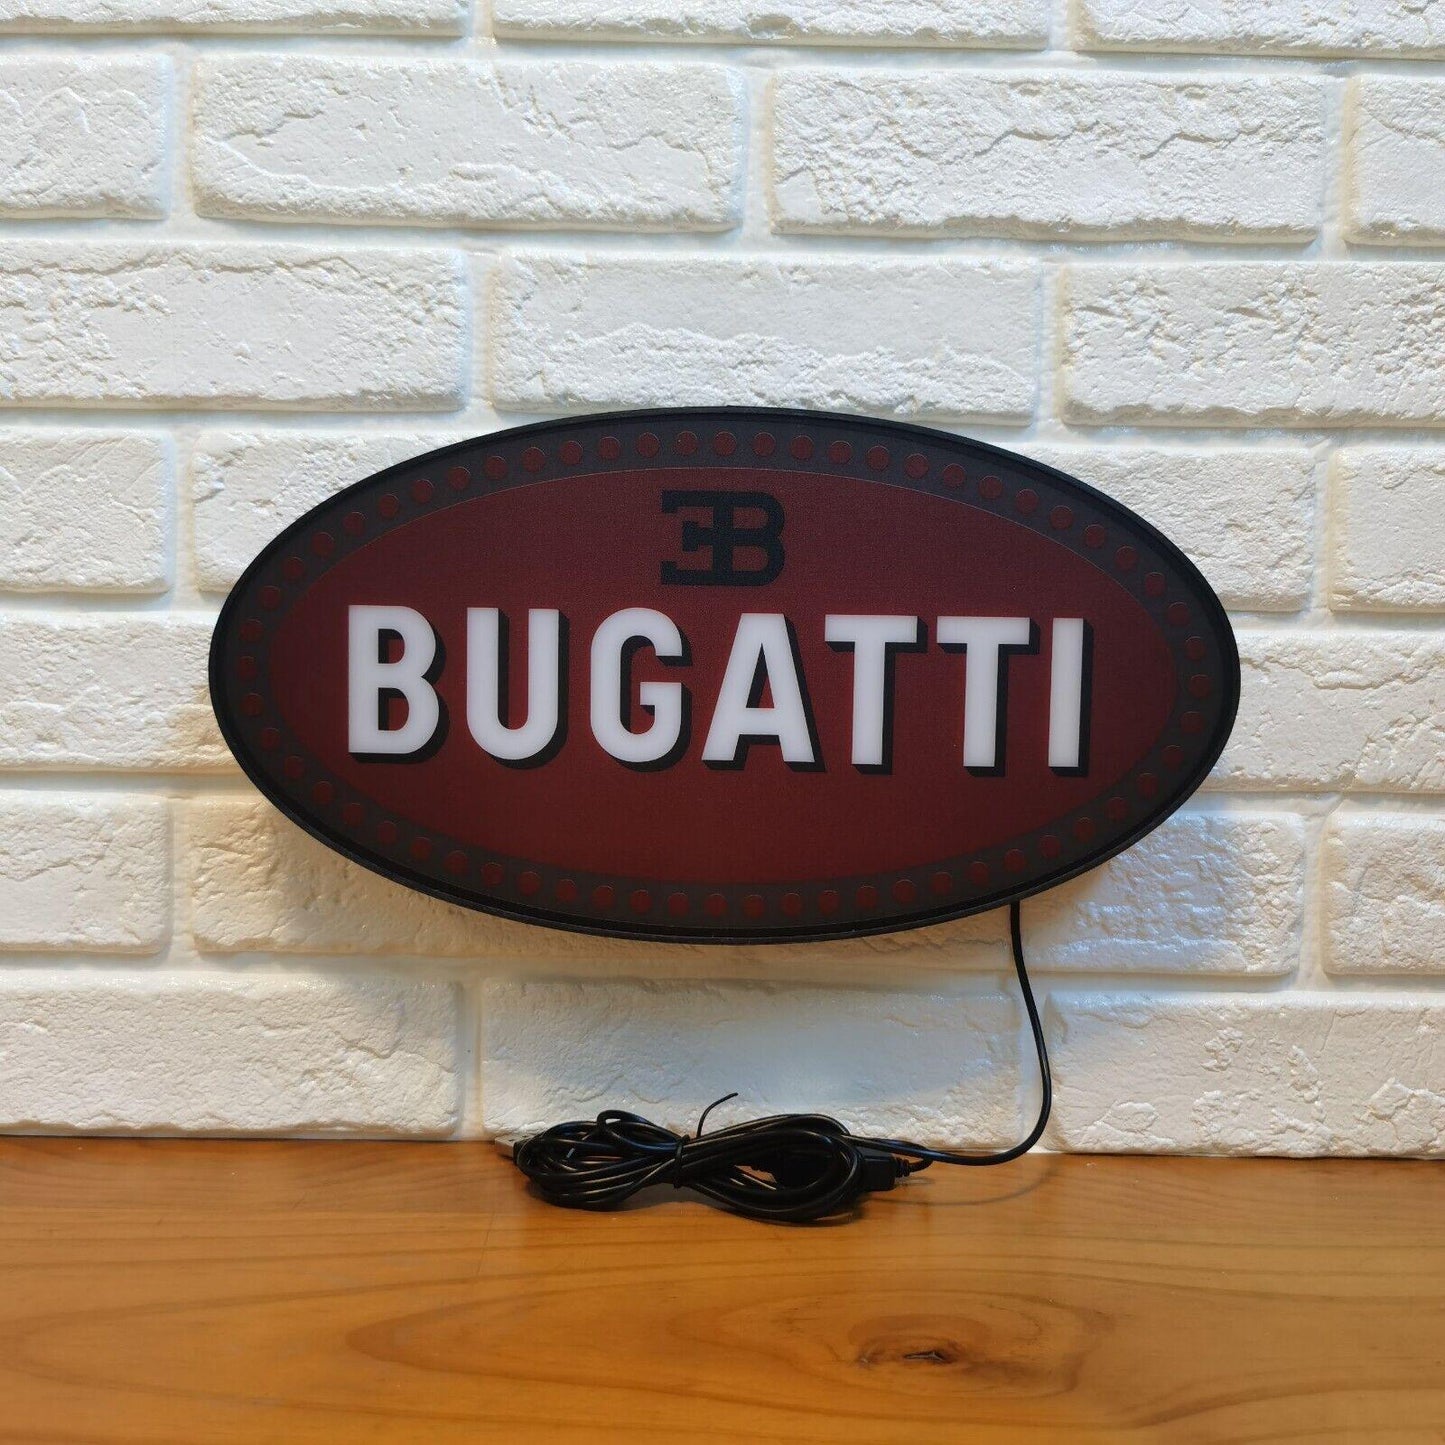 Bugatti LED Light Box USB Power Supply Luxury Car Decor Great Gift for Car Lovers - FYLZGO Signs